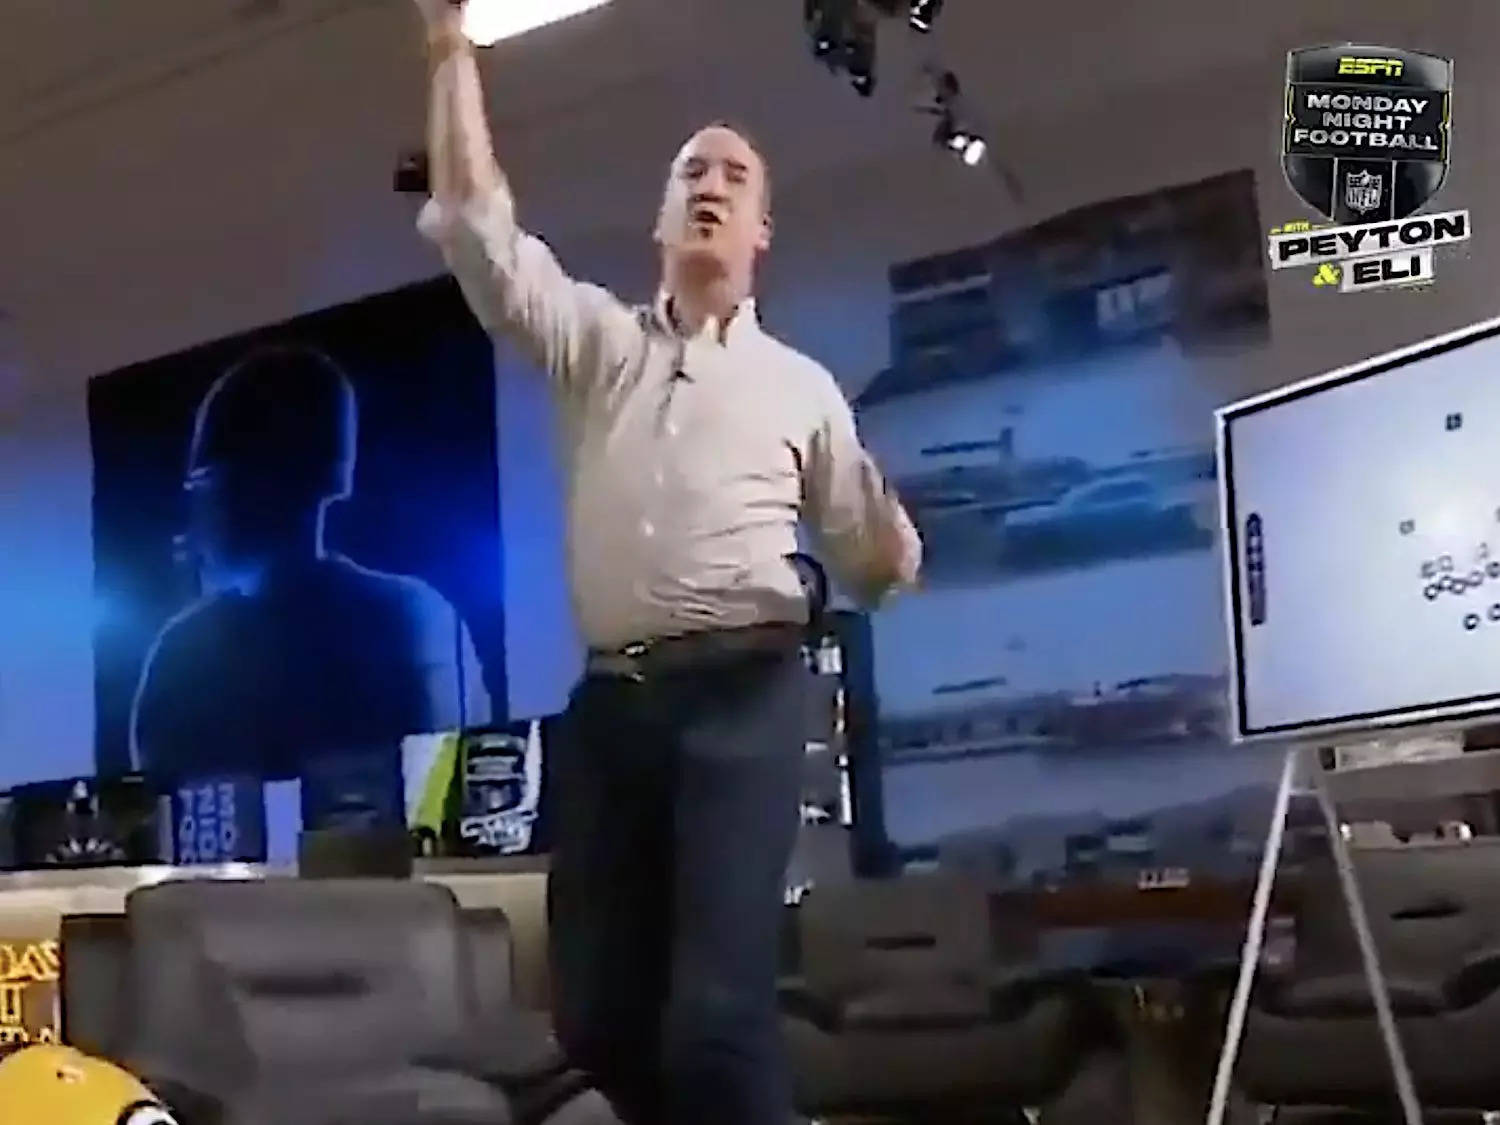 Screenshot shows Peyton Manning imitating an Aaron Rodgers throw.